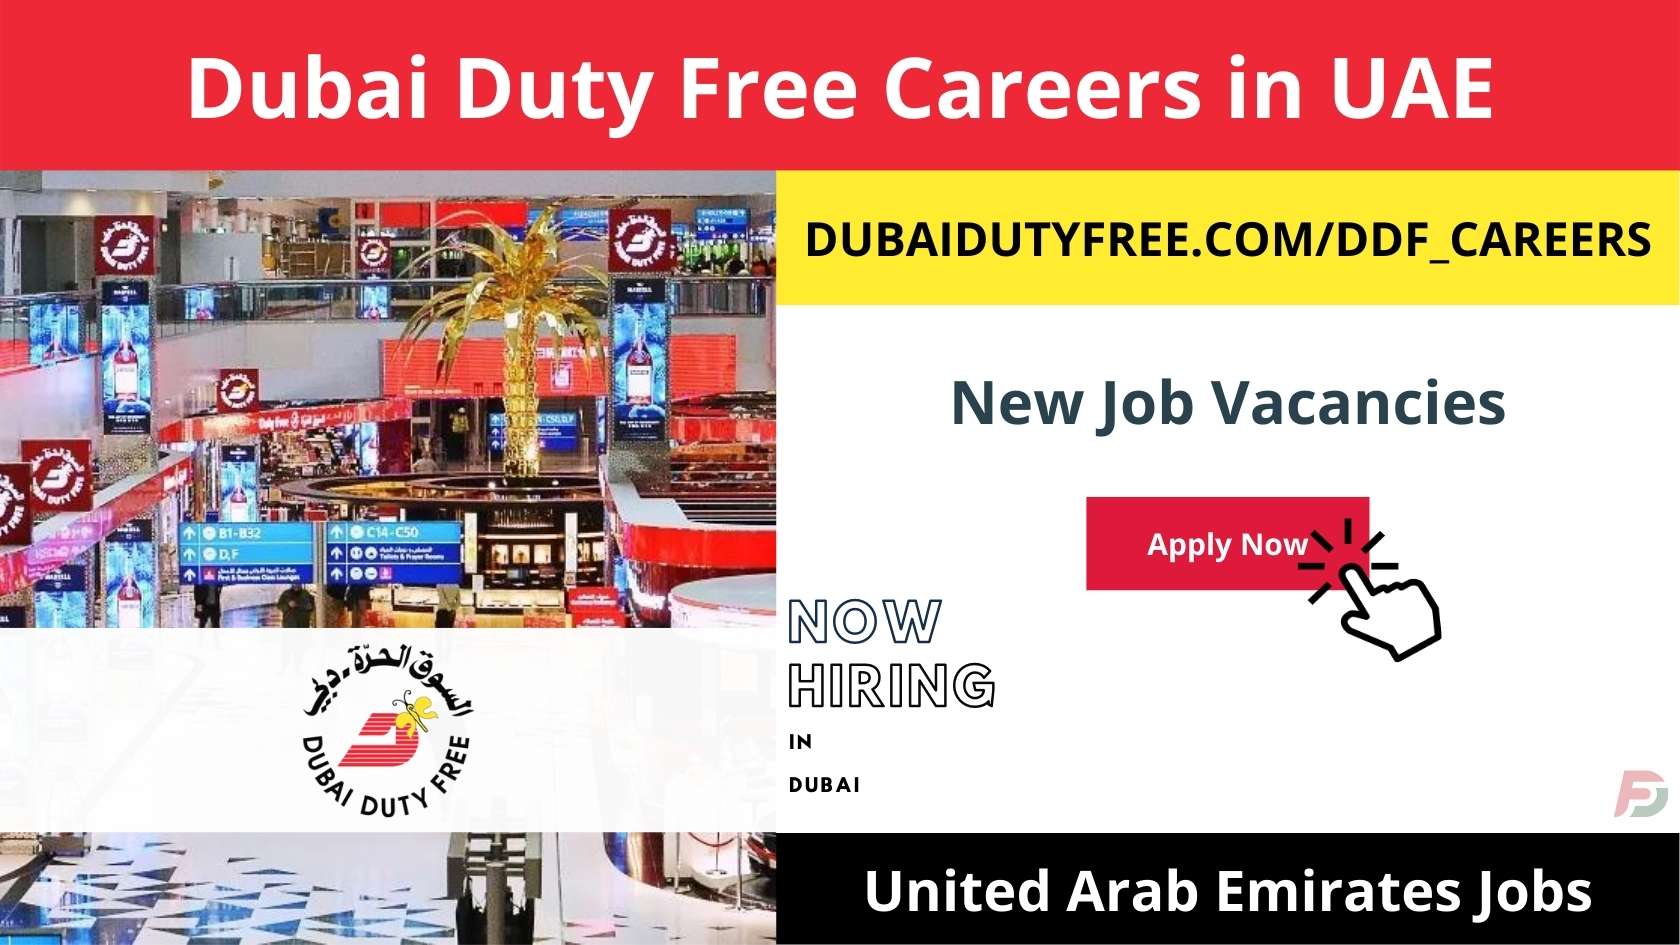 Dubai Duty Free Careers in UAE